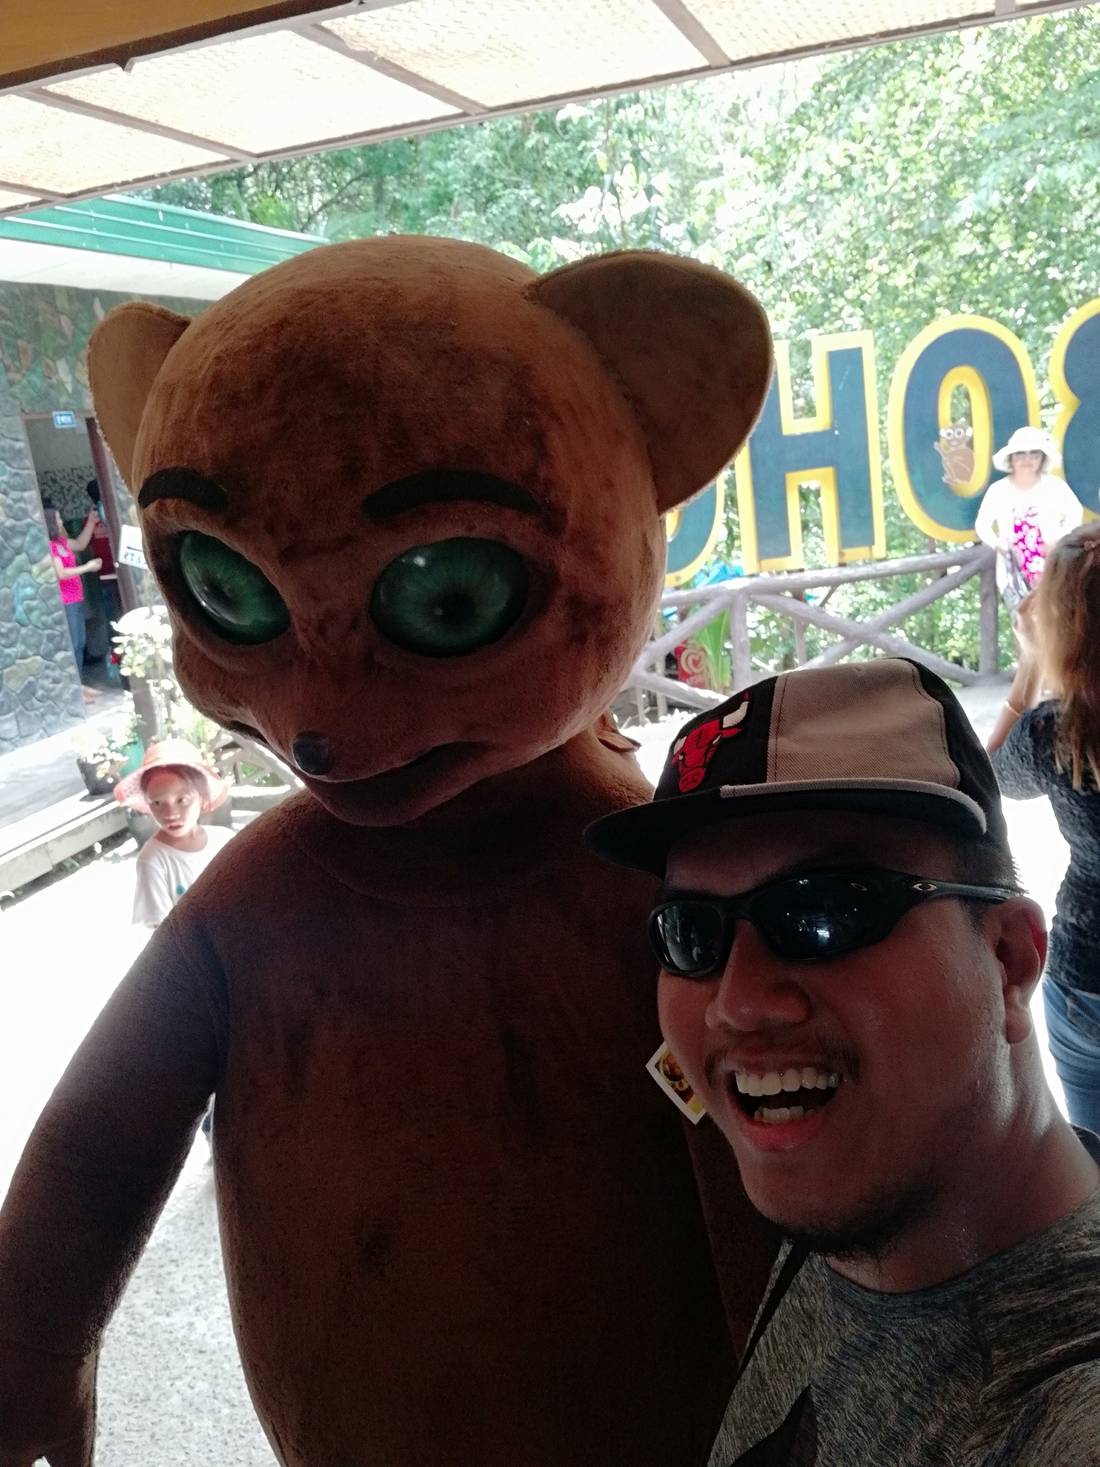 Selfie with the Tarsier mascot